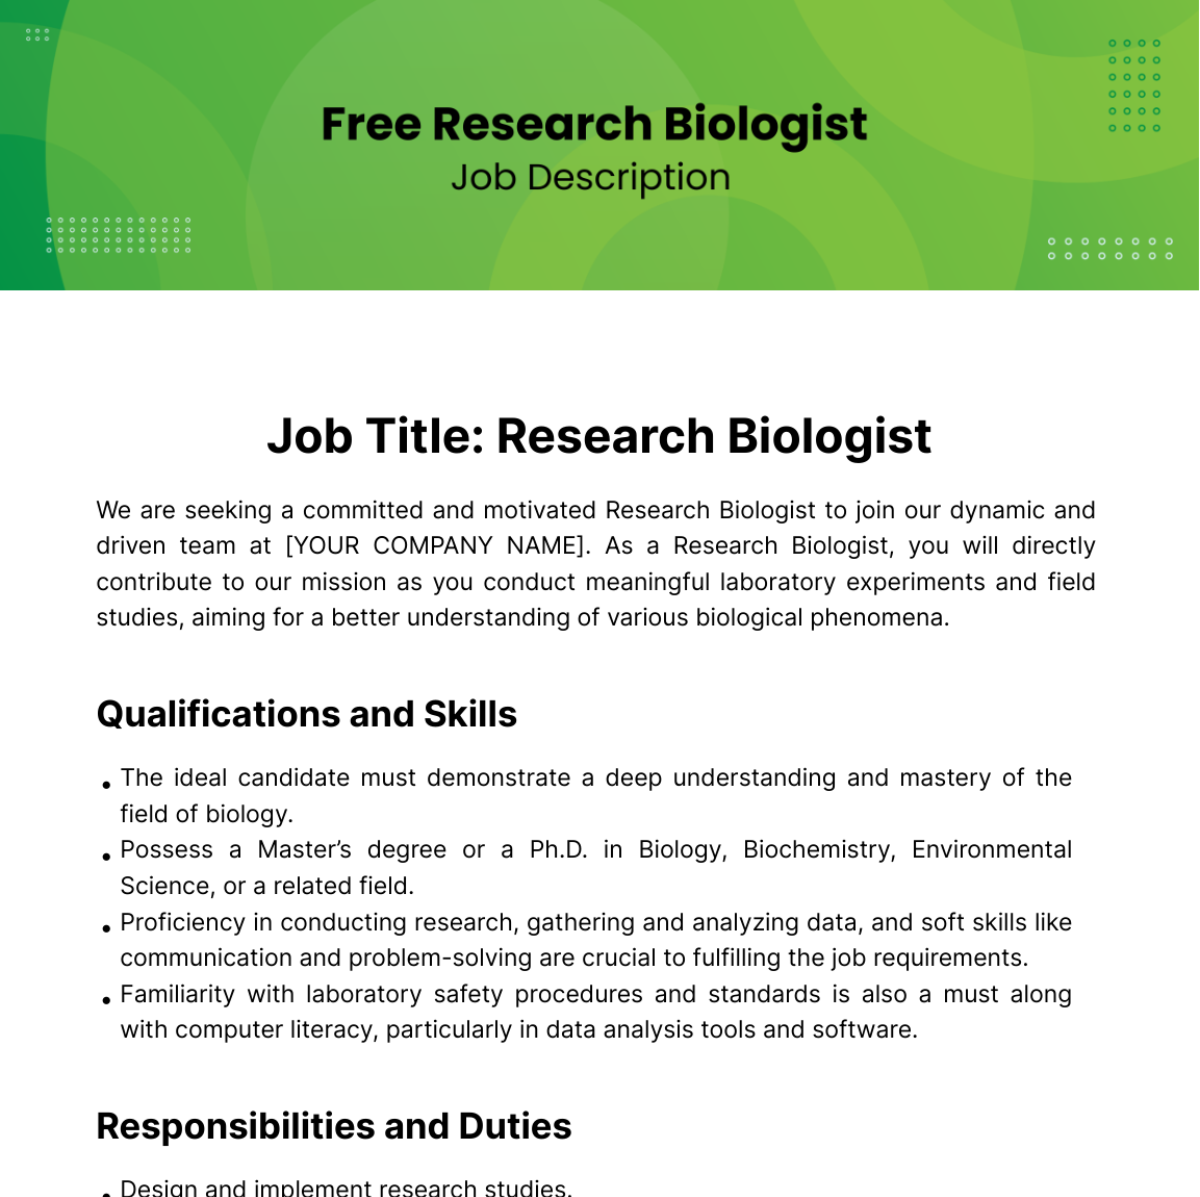 Free Research Biologist Job Description Template